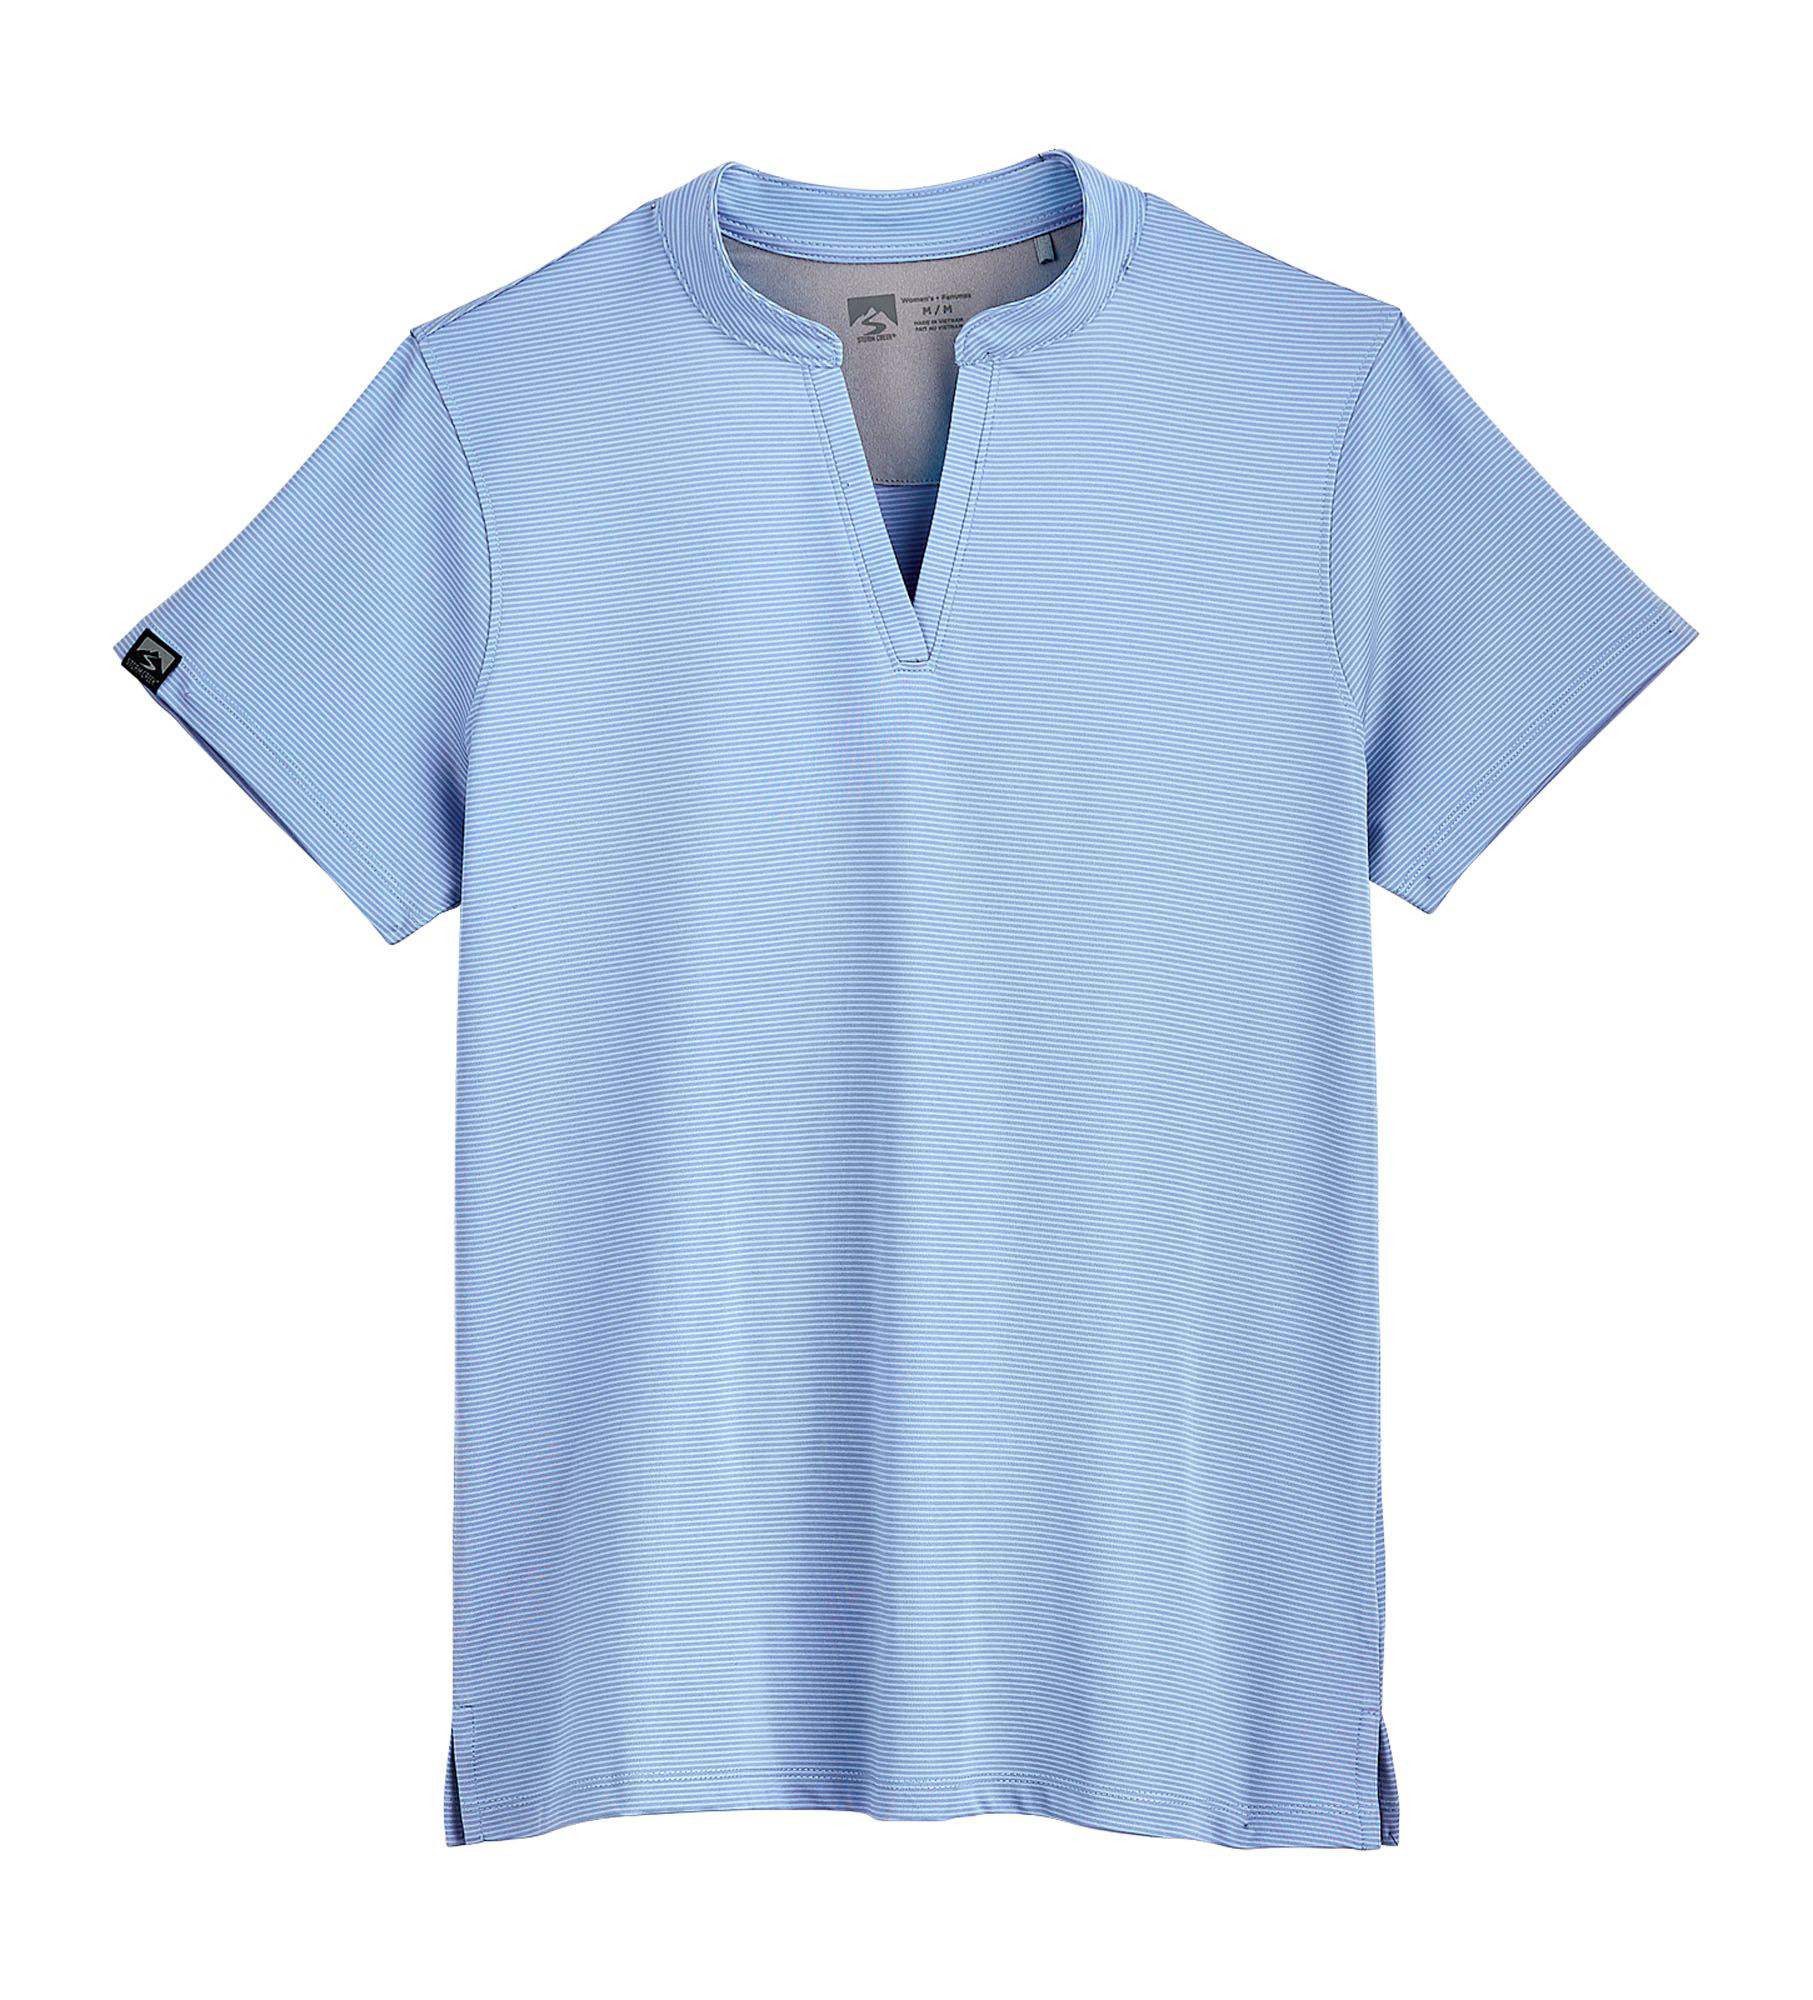 Storm Creek Optimist Short-Sleeve Polo Shirt for Ladies - Peri Blue - 2XL